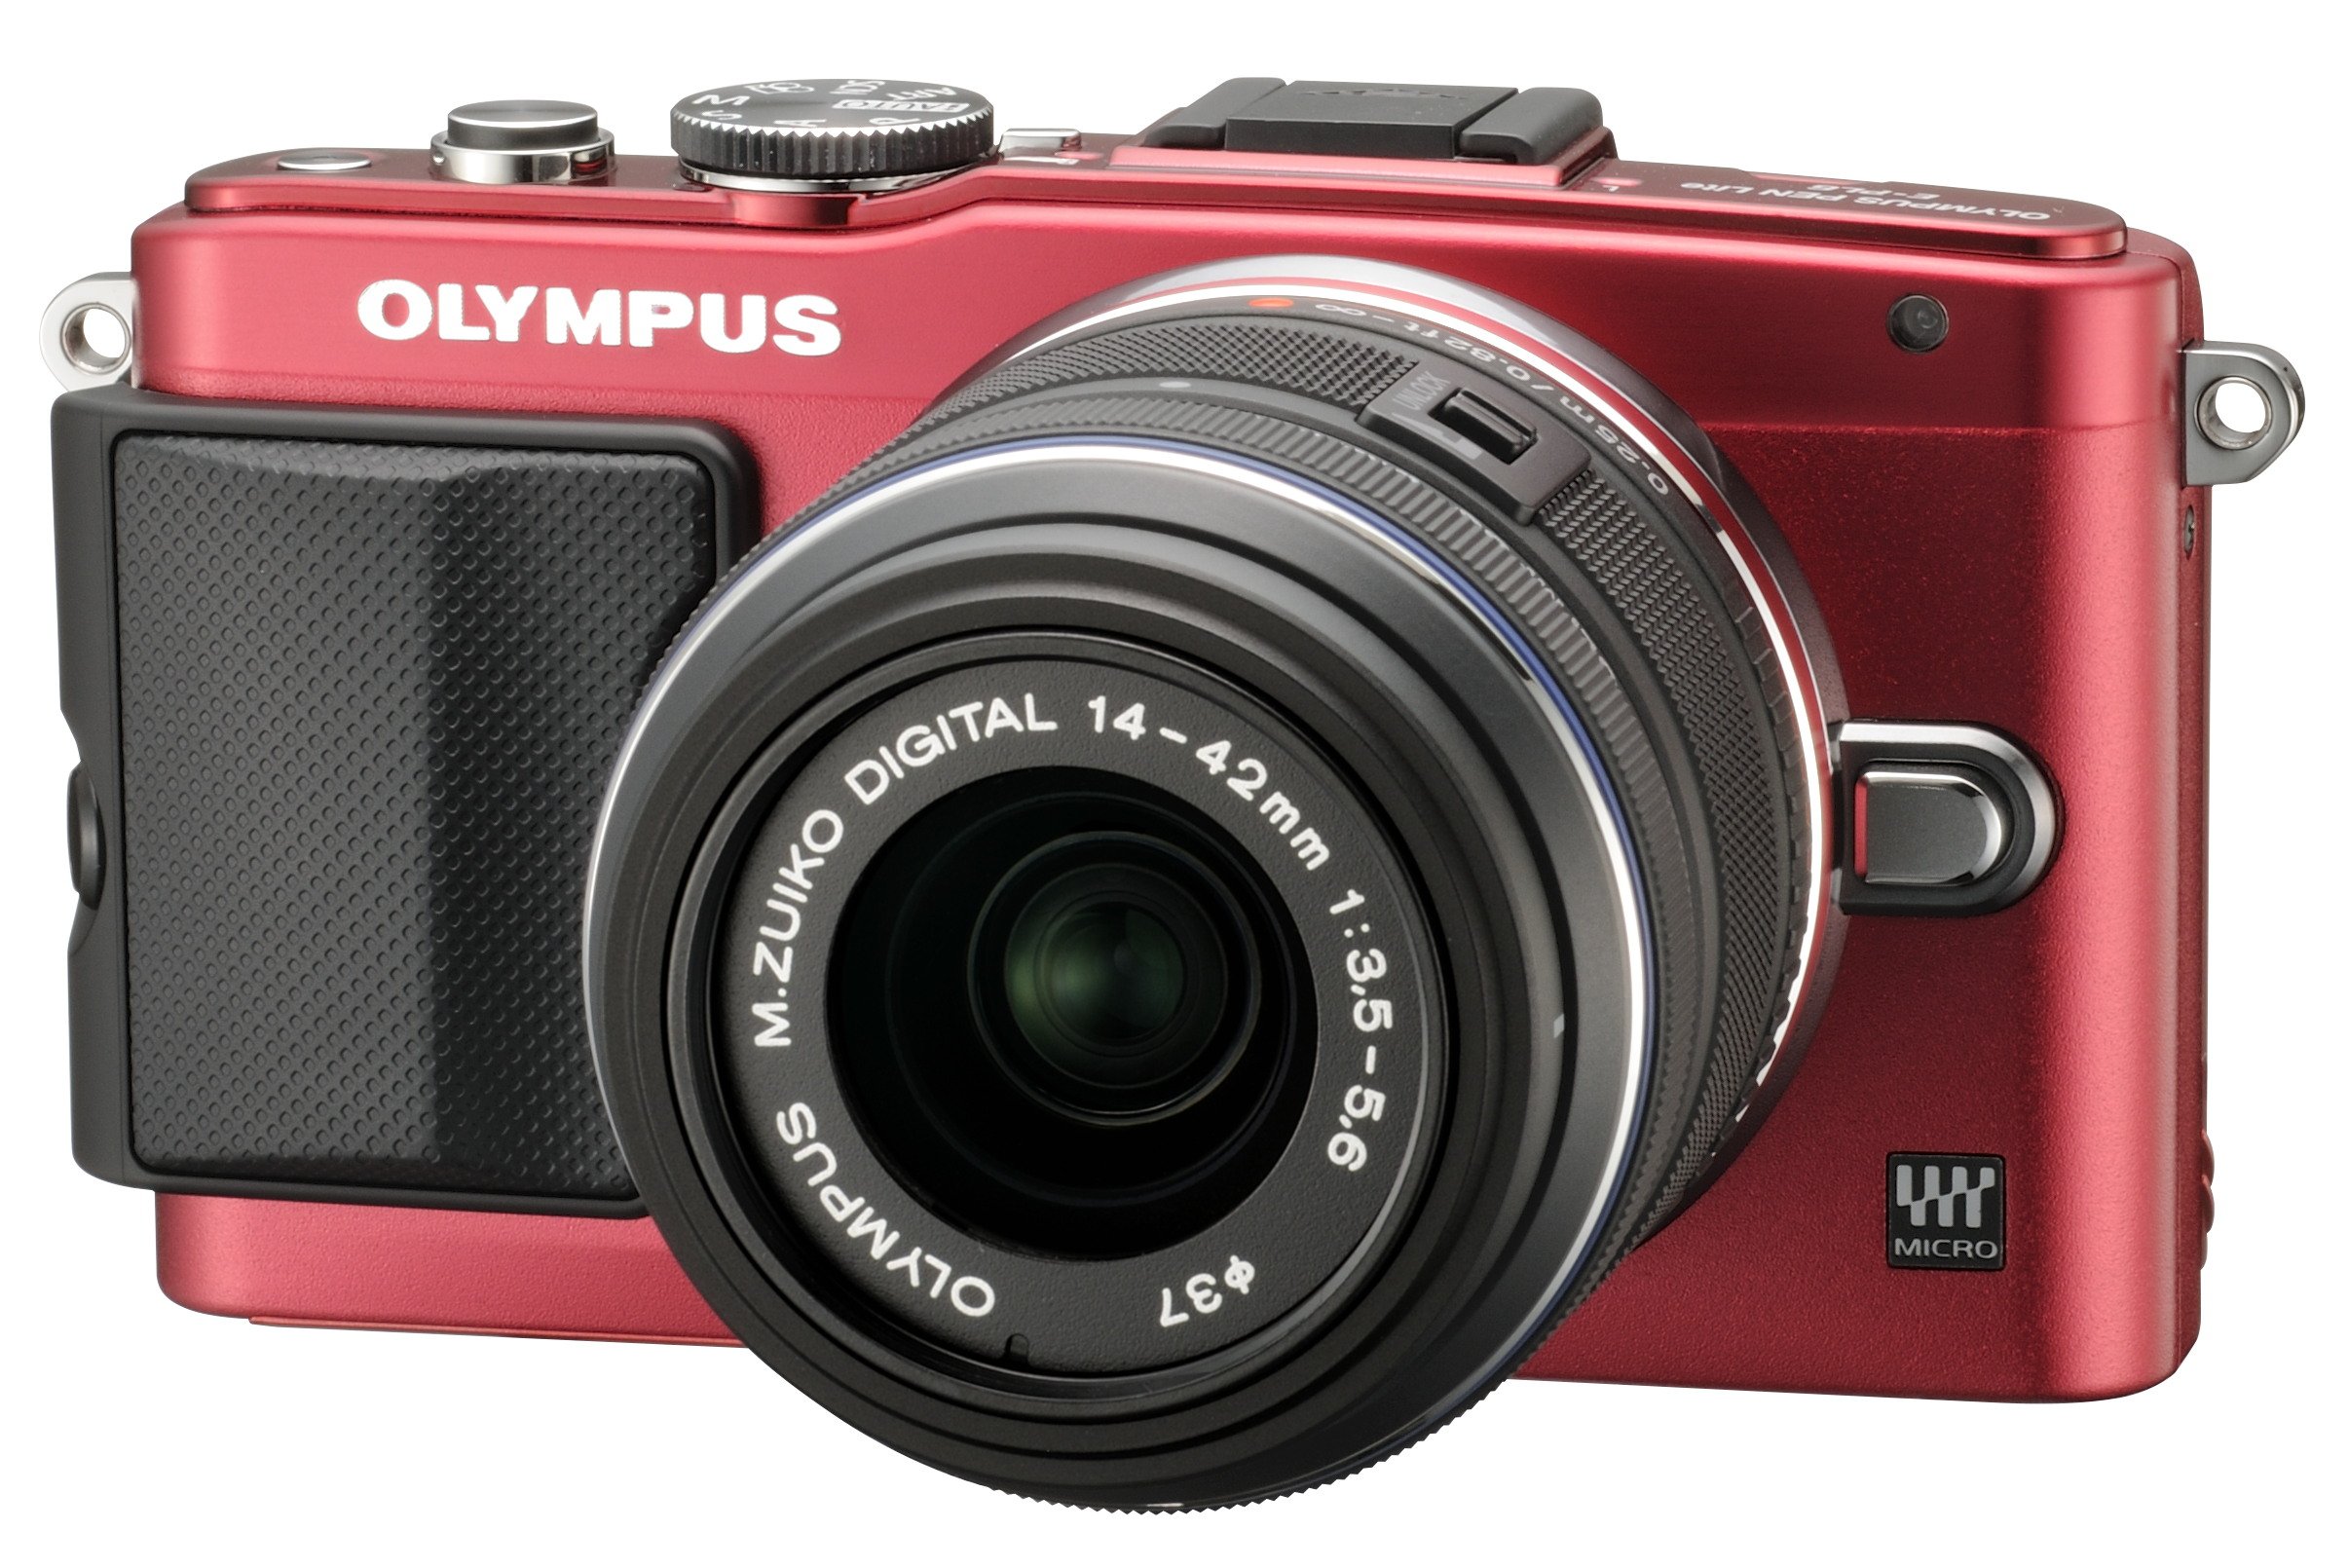 Olympus Mirrorless SLR E-PL6 with M Zuiko Digital 14-42mm Lens (Red) - International Version